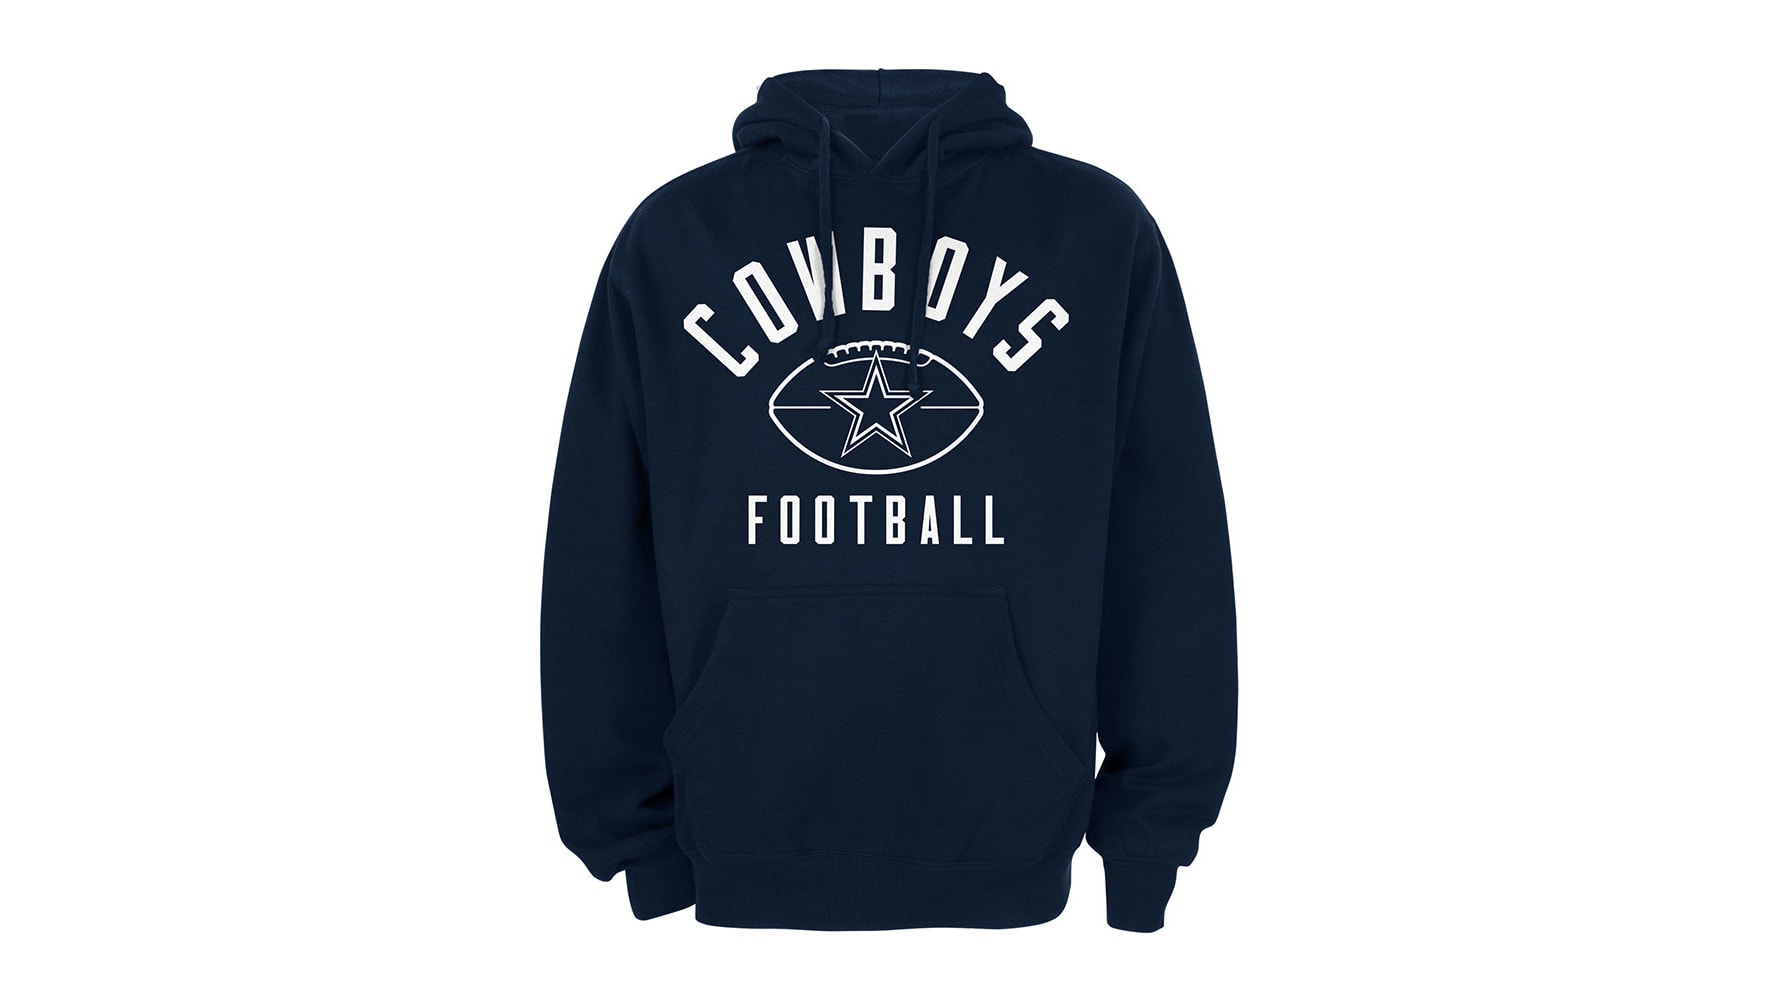 Dallas Cowboys Men's Navy/Gray NFL Wildcat Crewneck Sweatshirt, Large